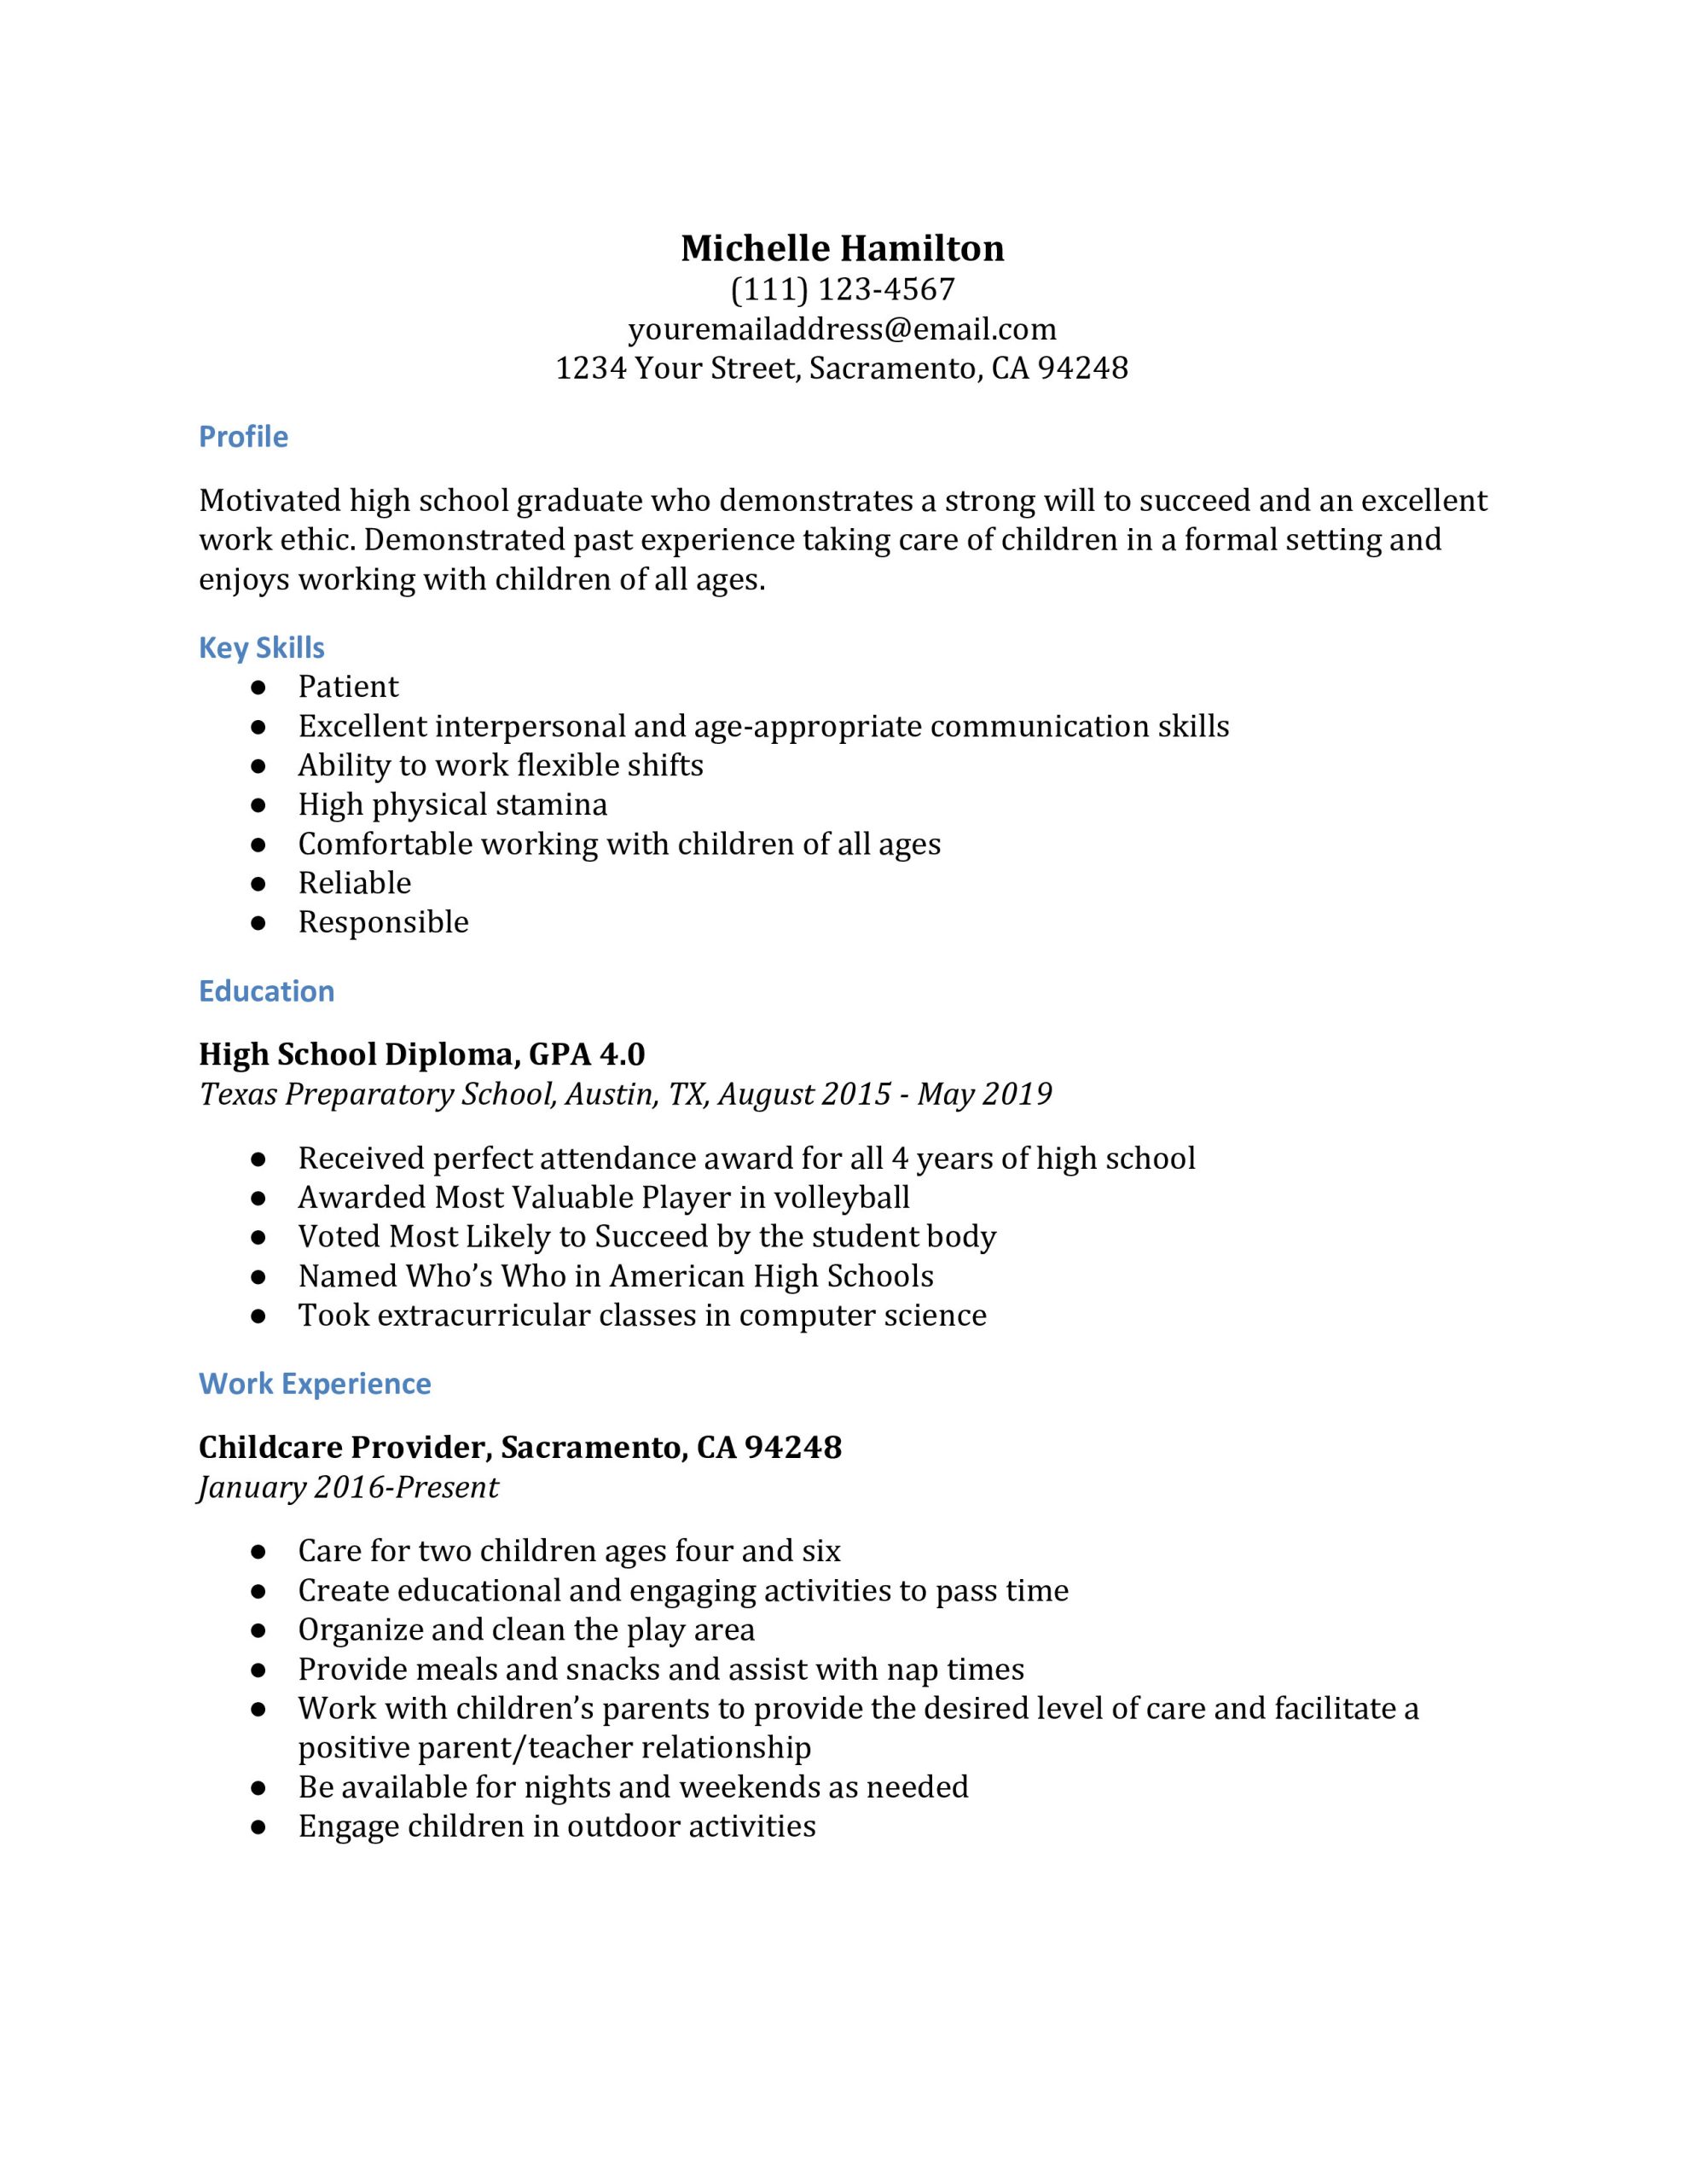 Sample Resume for High School Graduate with Little Experience High School Resume Examples – Resumebuilder.com